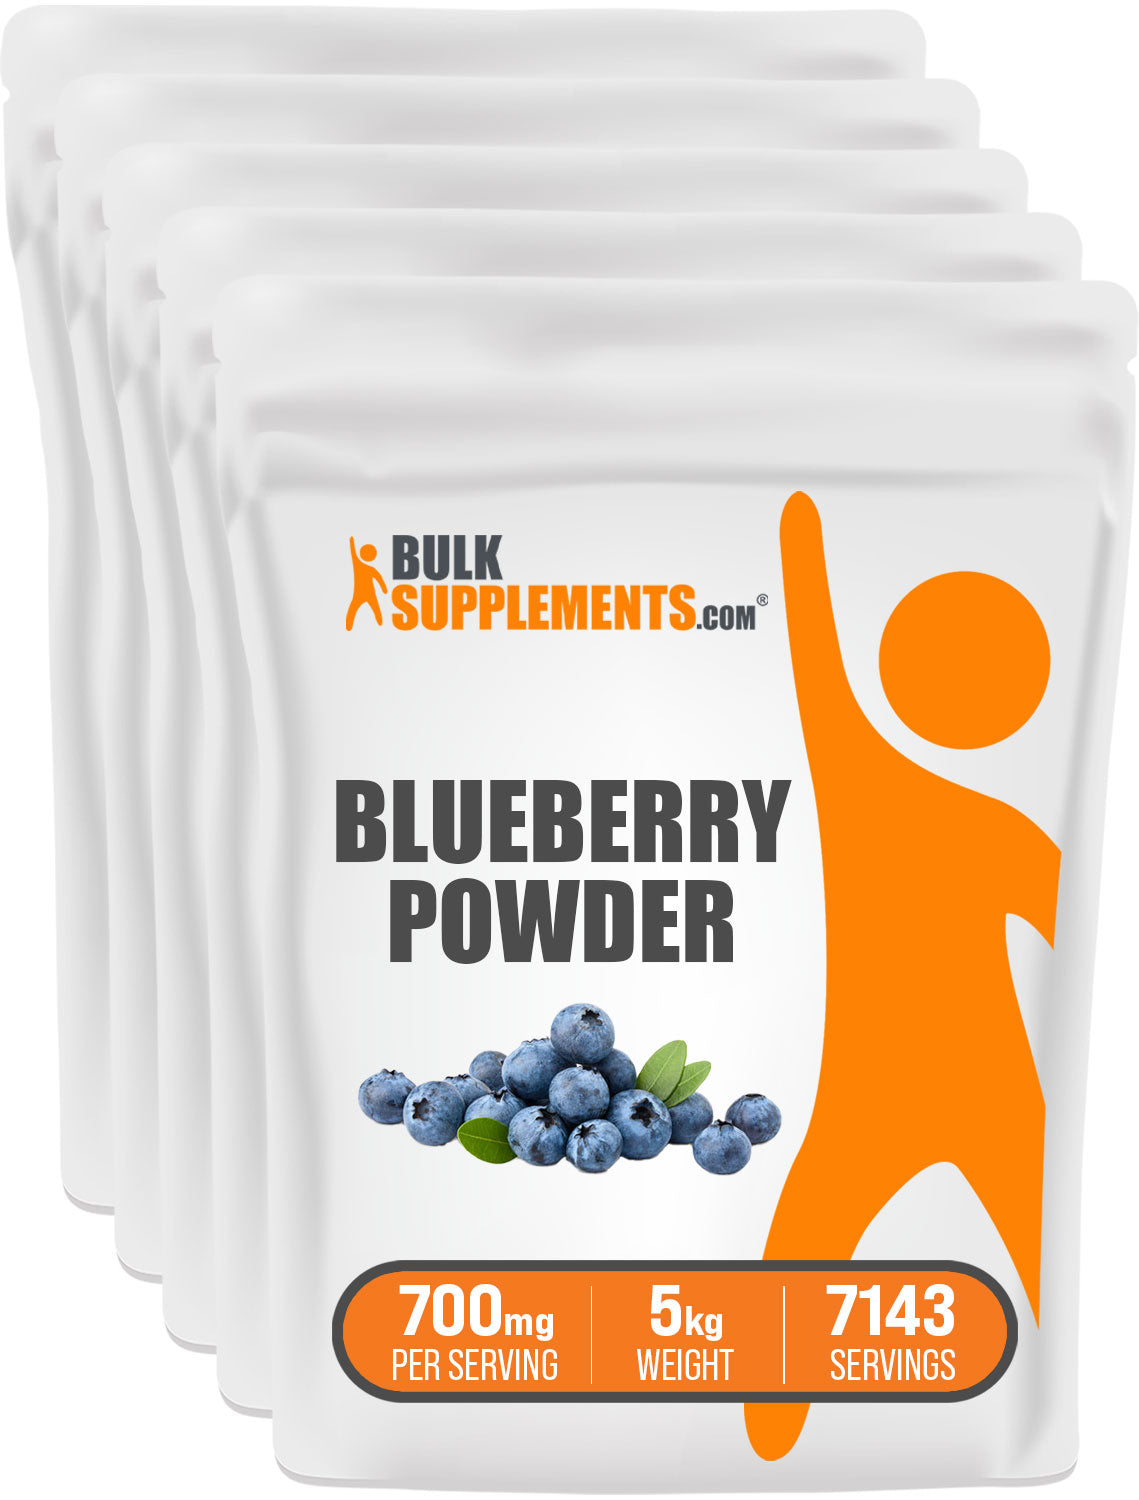 5kg of Blueberry Powder